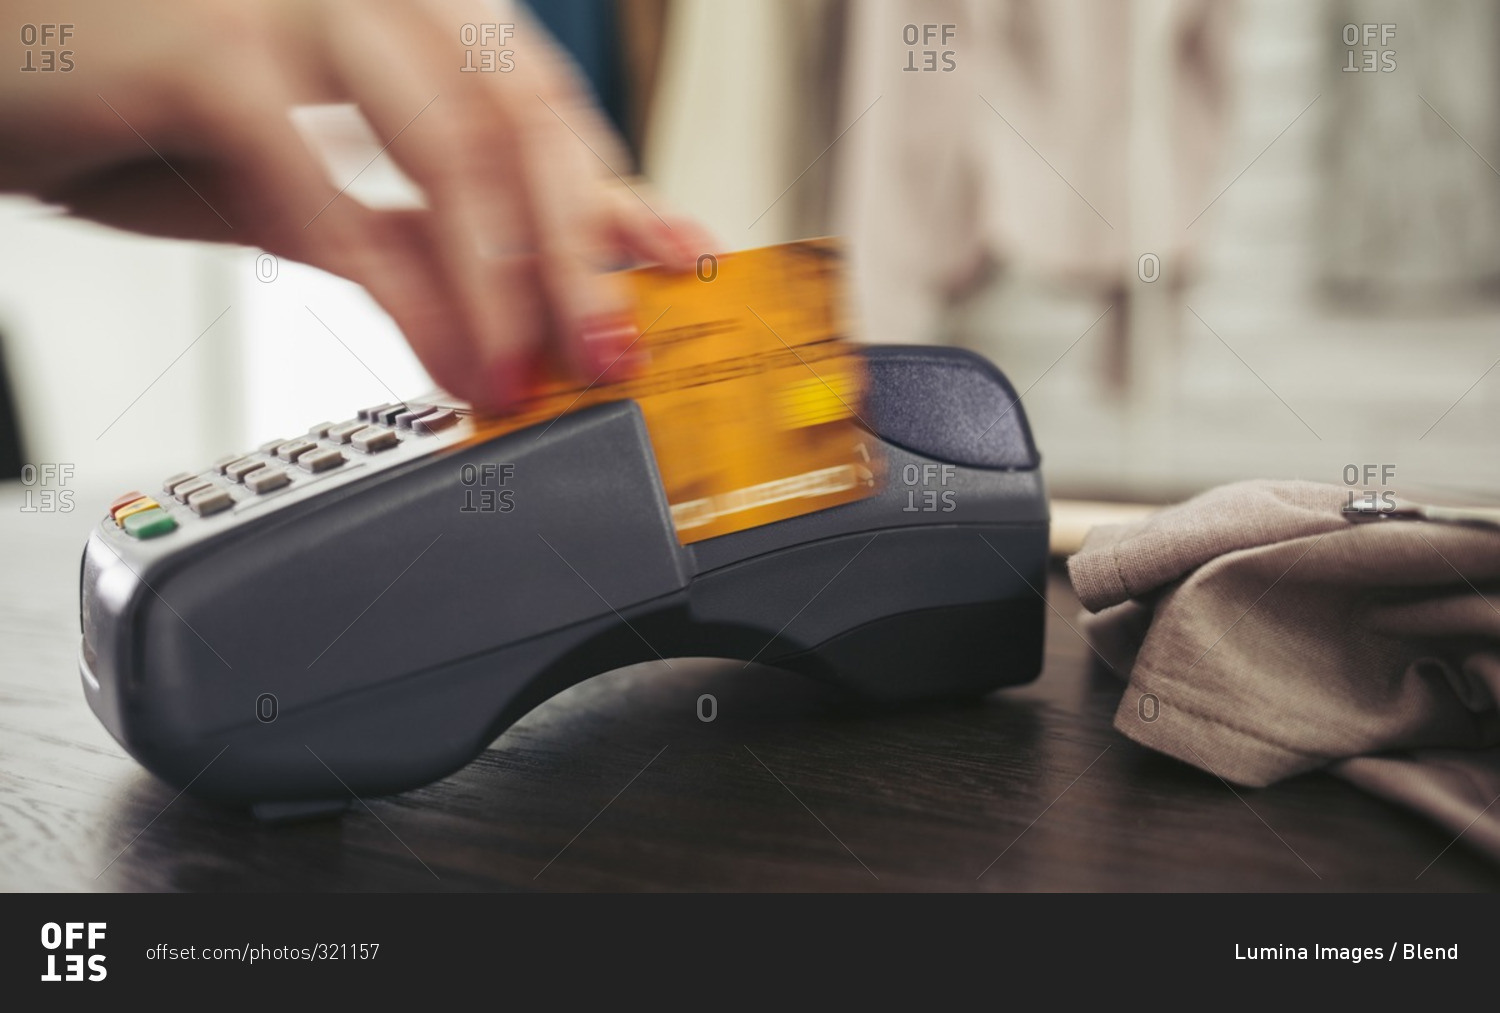 Woman swiping credit card through credit card reader